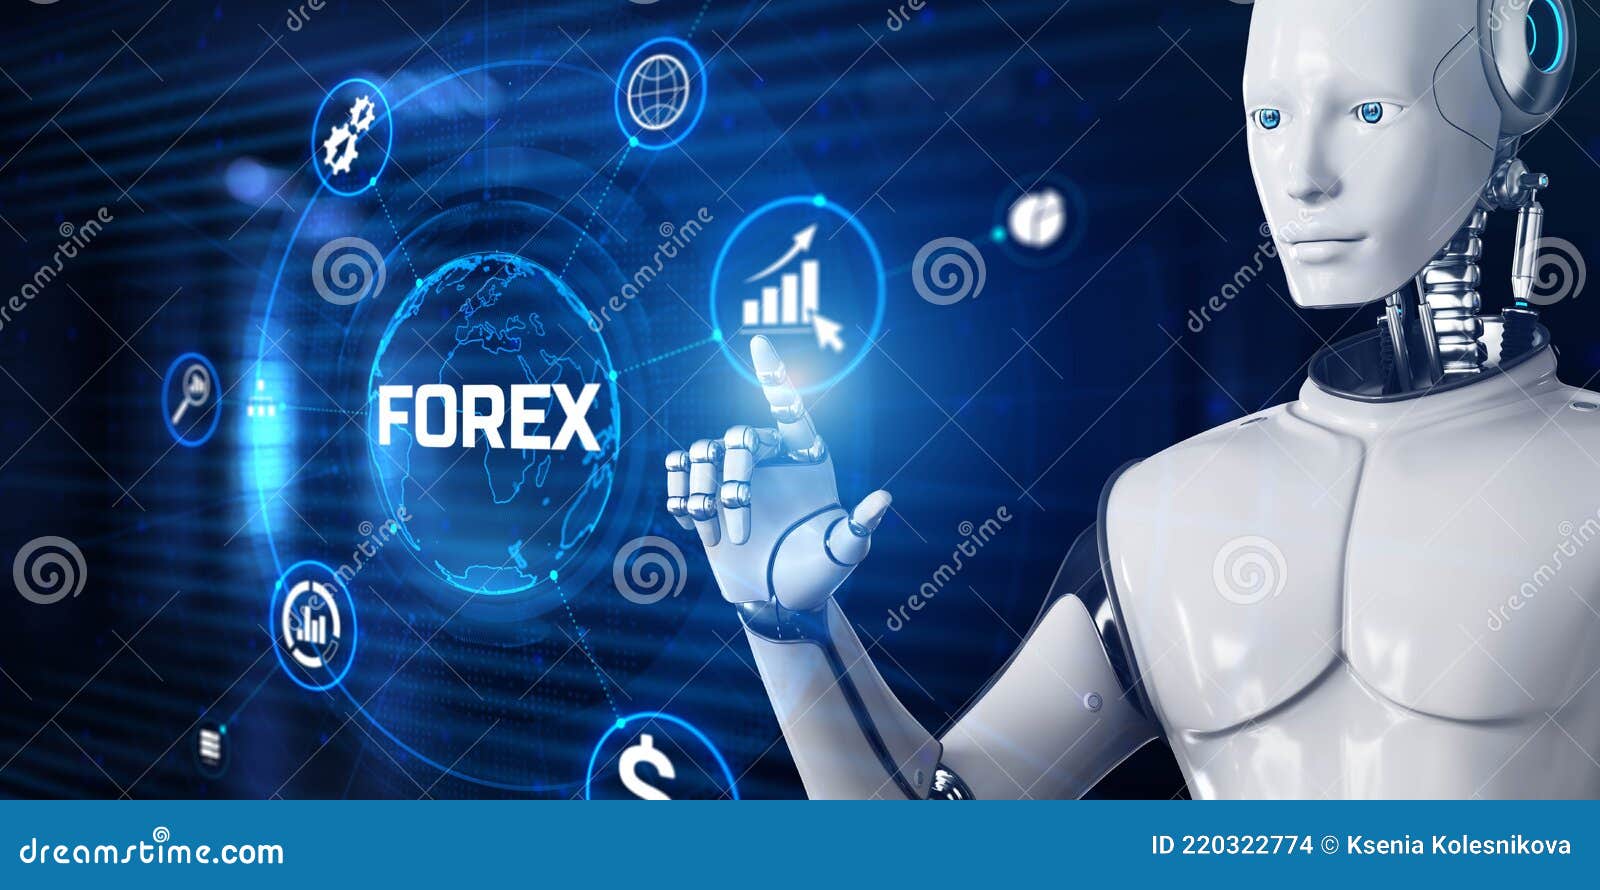 forex bots